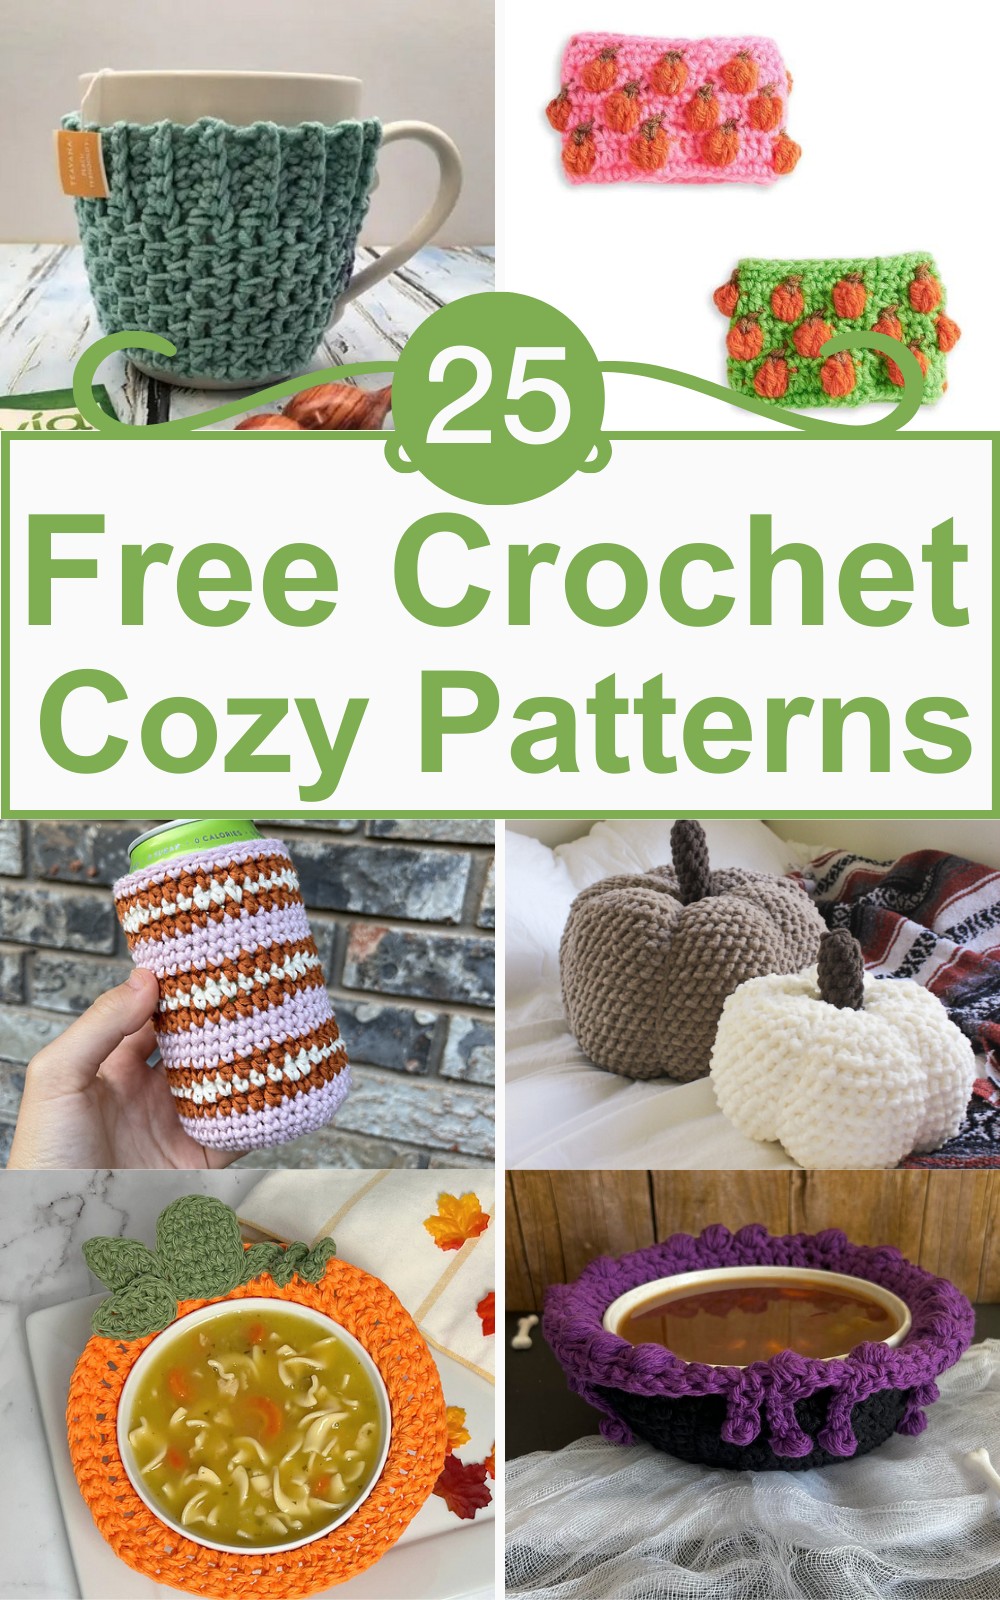 5 Free Crochet Cozy Patterns